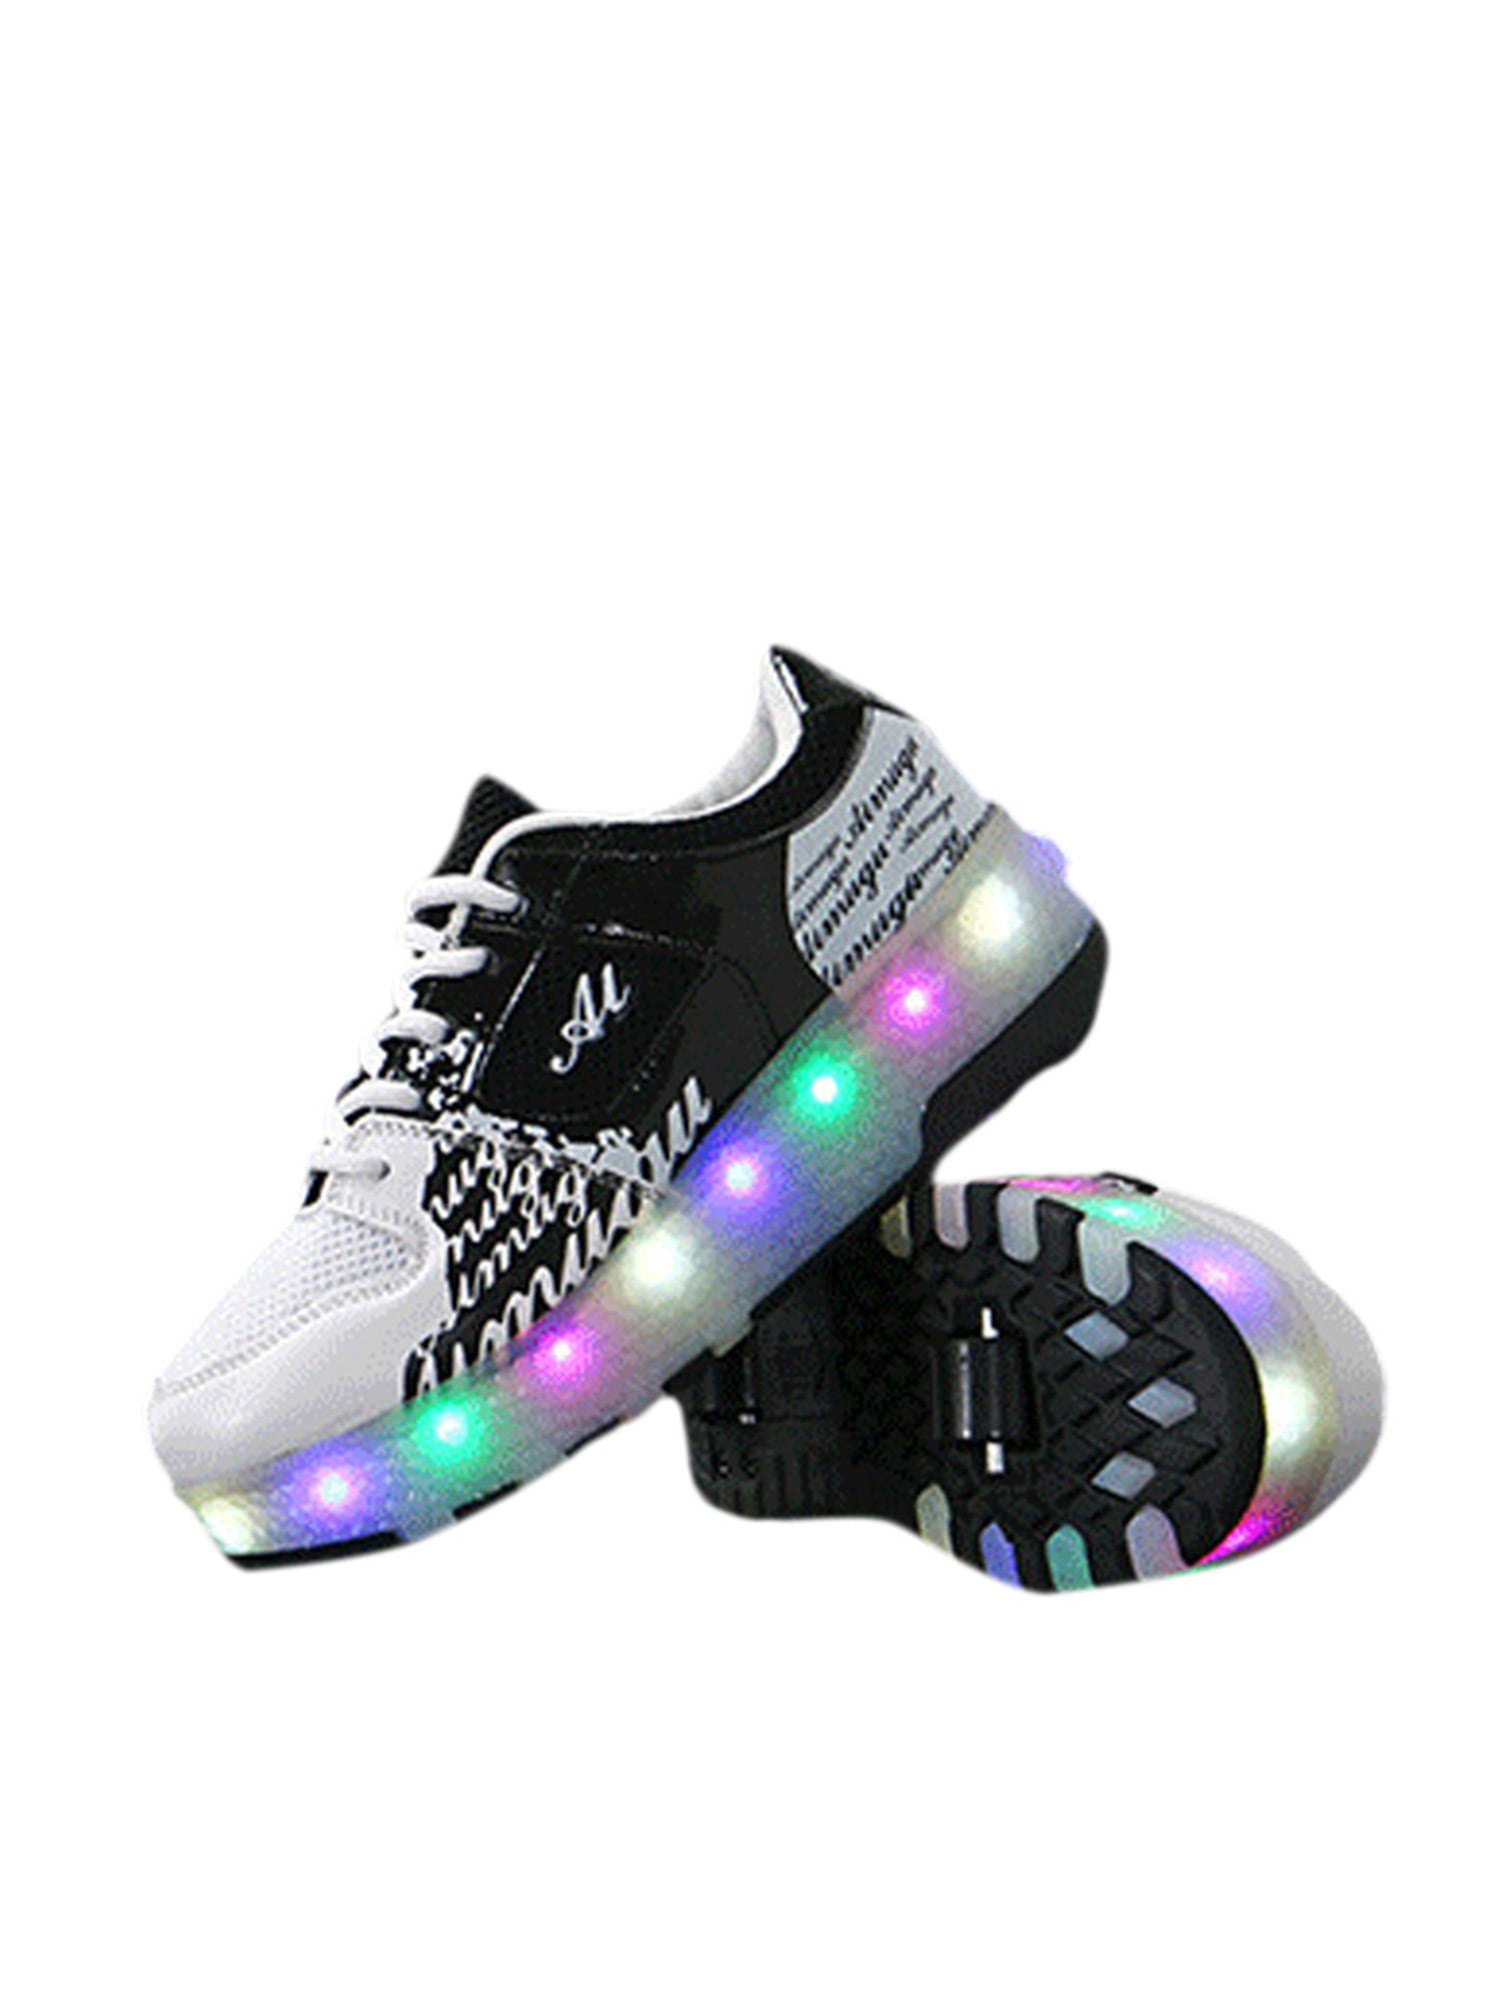 Brand New Heelys Style High Quality Size 3.5 Roller Shoe Skate Orange Color 